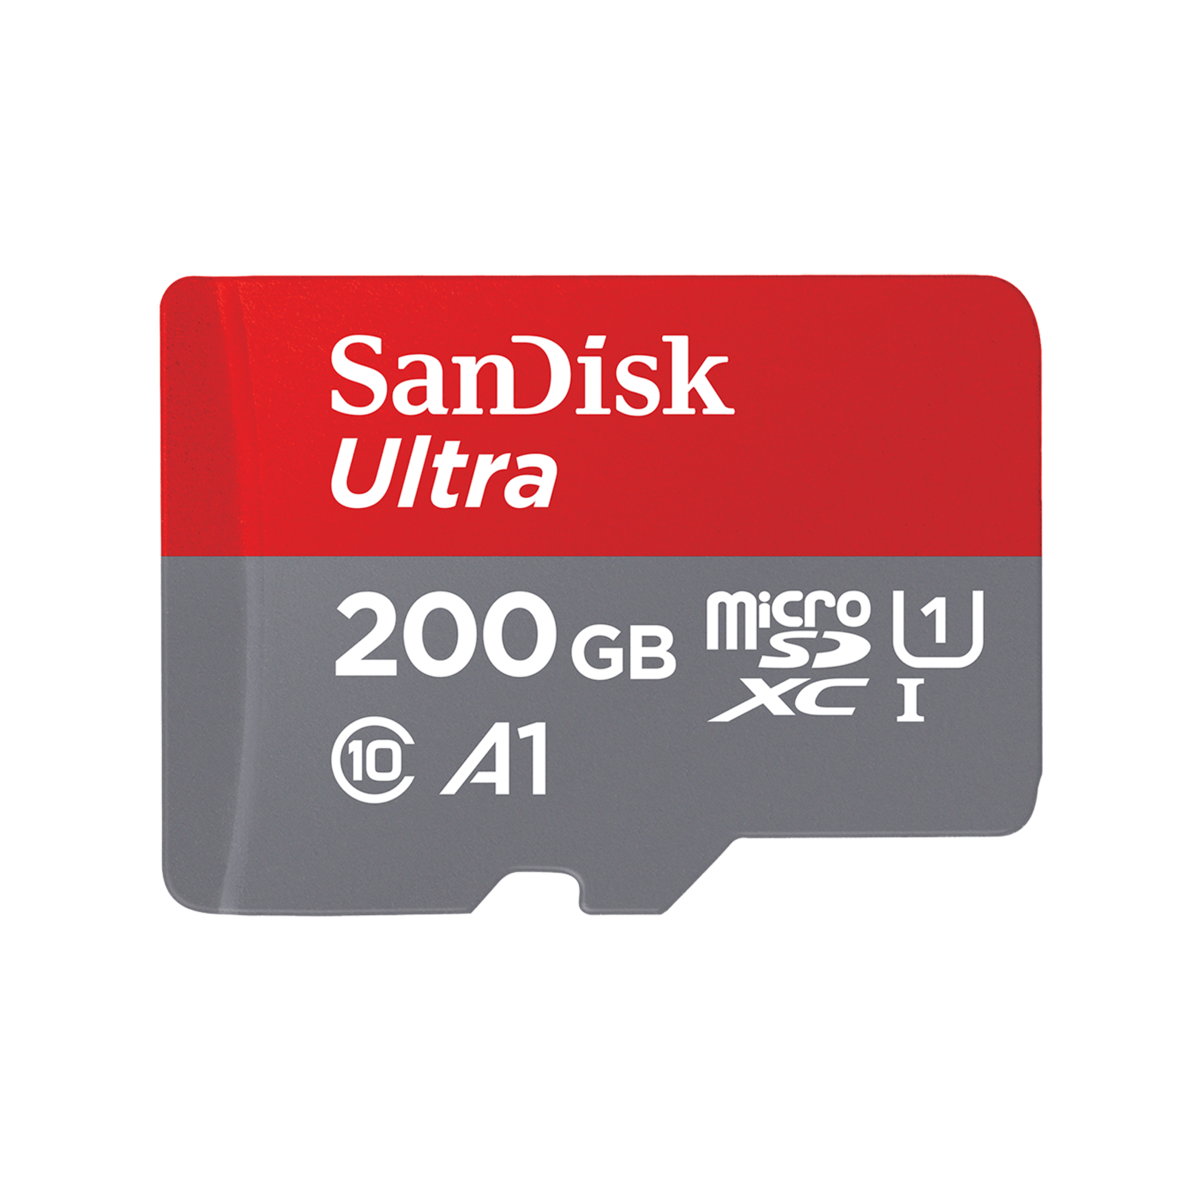 SanDisk Ultra 200GB MicroSDXC Verified for Sony Xperia XZ2 Premium by SanFlash 100MBs A1 U1 C10 Works with SanDisk